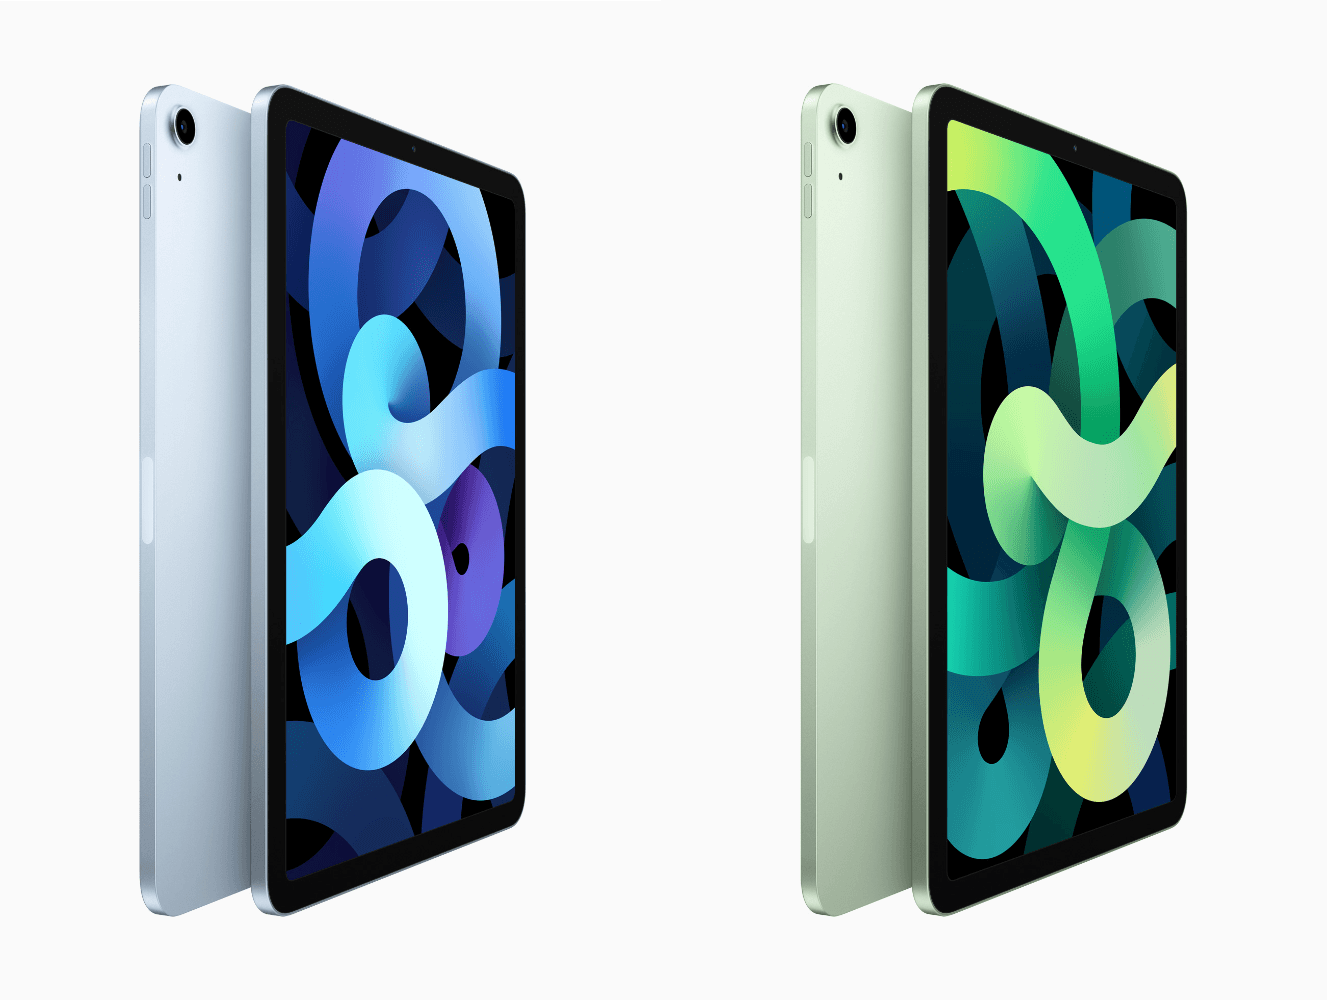 The new iPad Air resembles the iPad Pro’s design. Source: Apple.